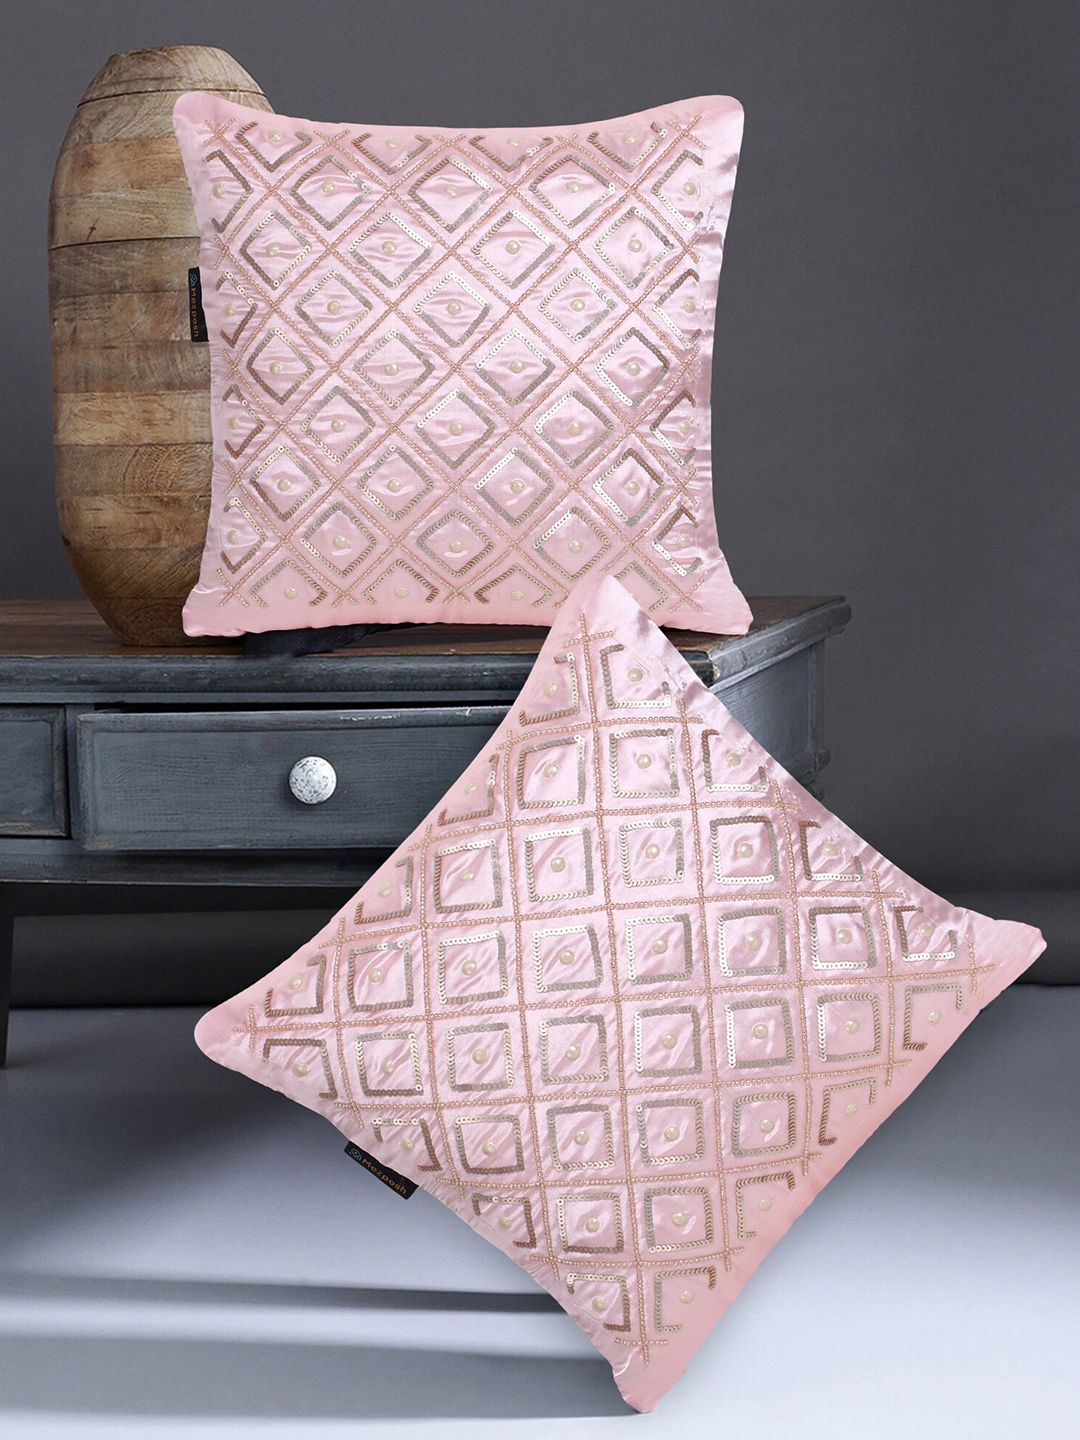 Mezposh Rose Gold Geometric Embellished Satin Square Cushion Covers Set of 2 Price in India